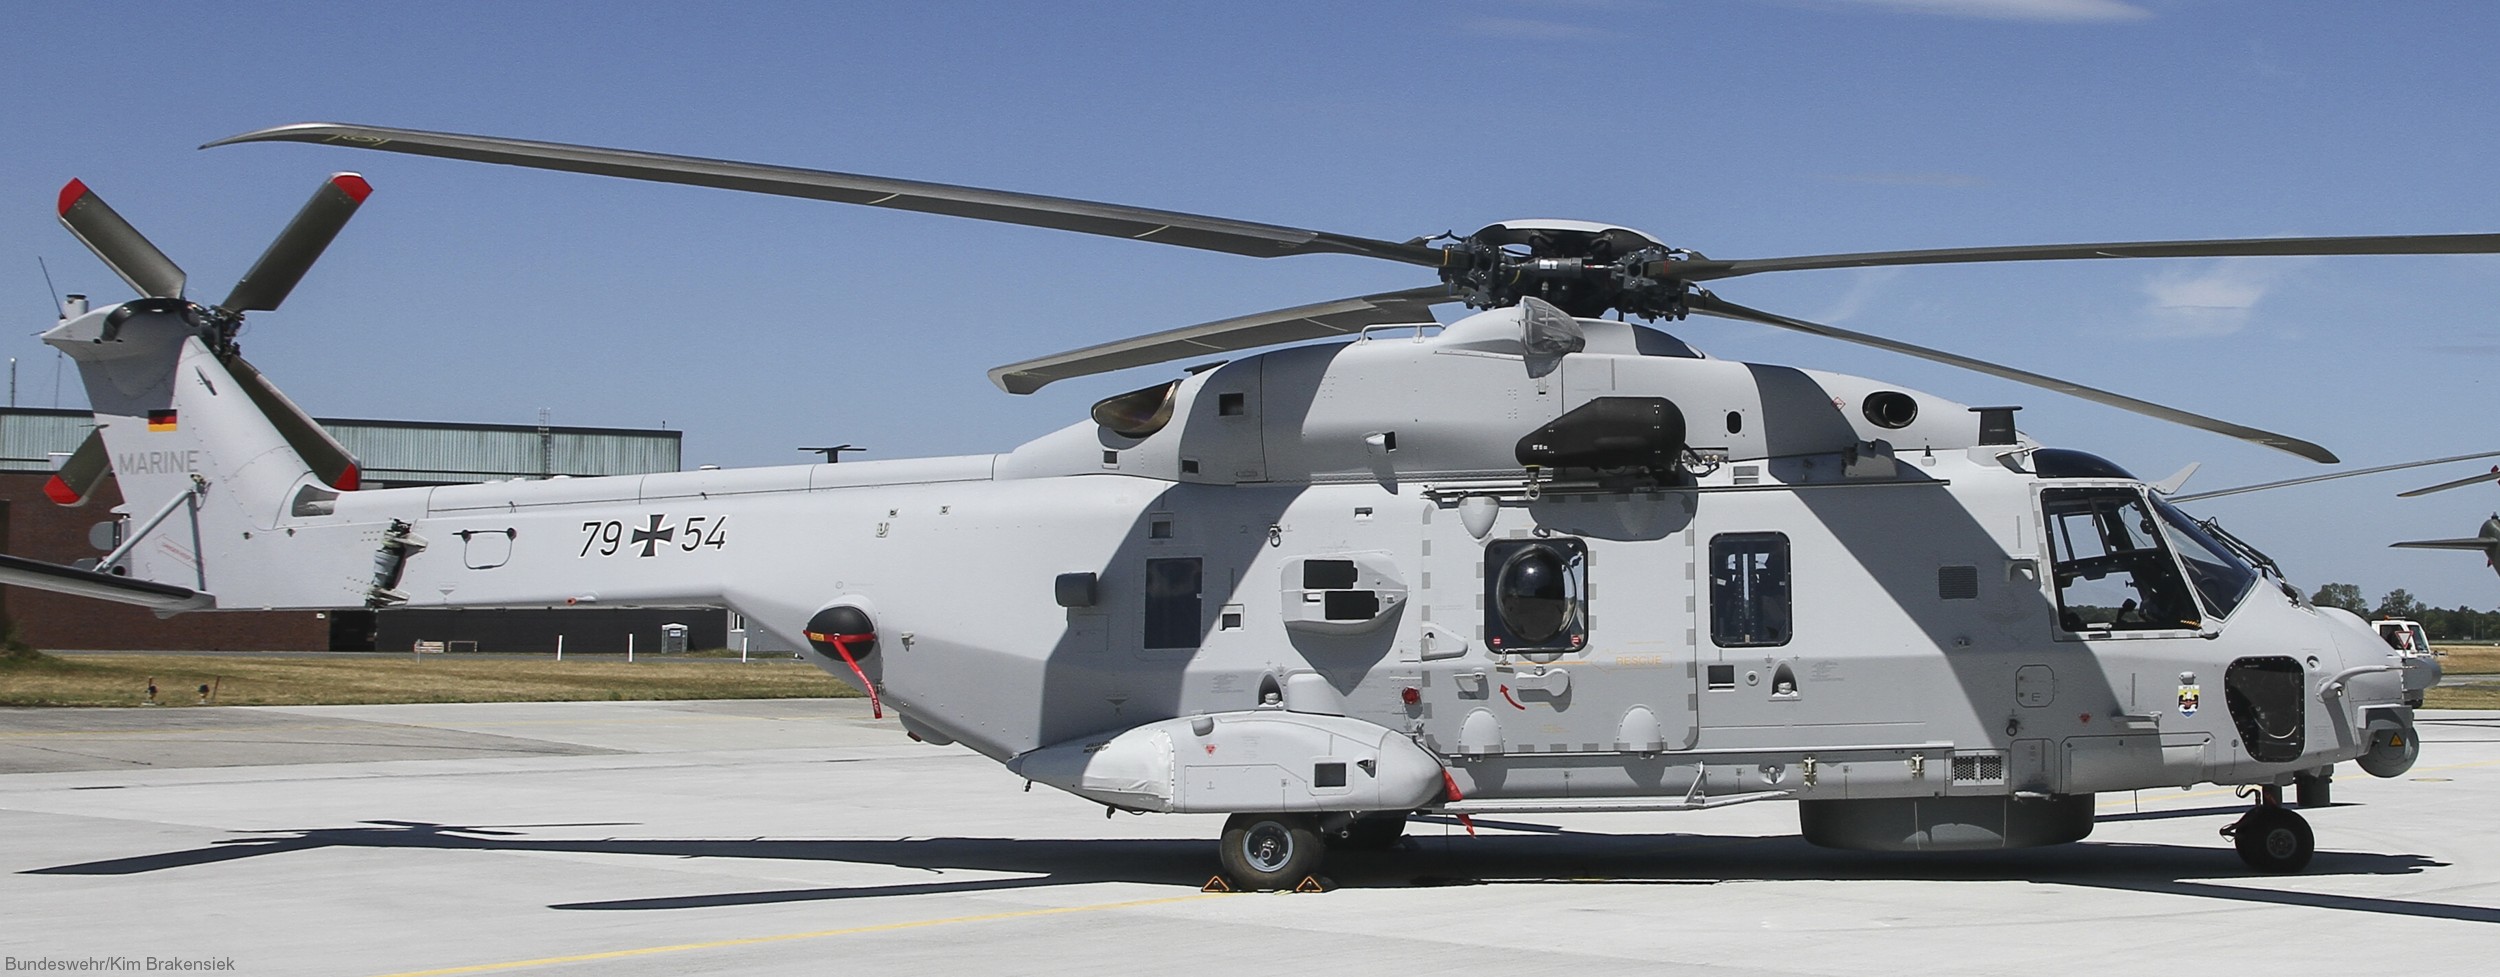 nh-90 nth sea lion helicopter german navy deutsche marine nhindustries mfg-5 nordholz 04